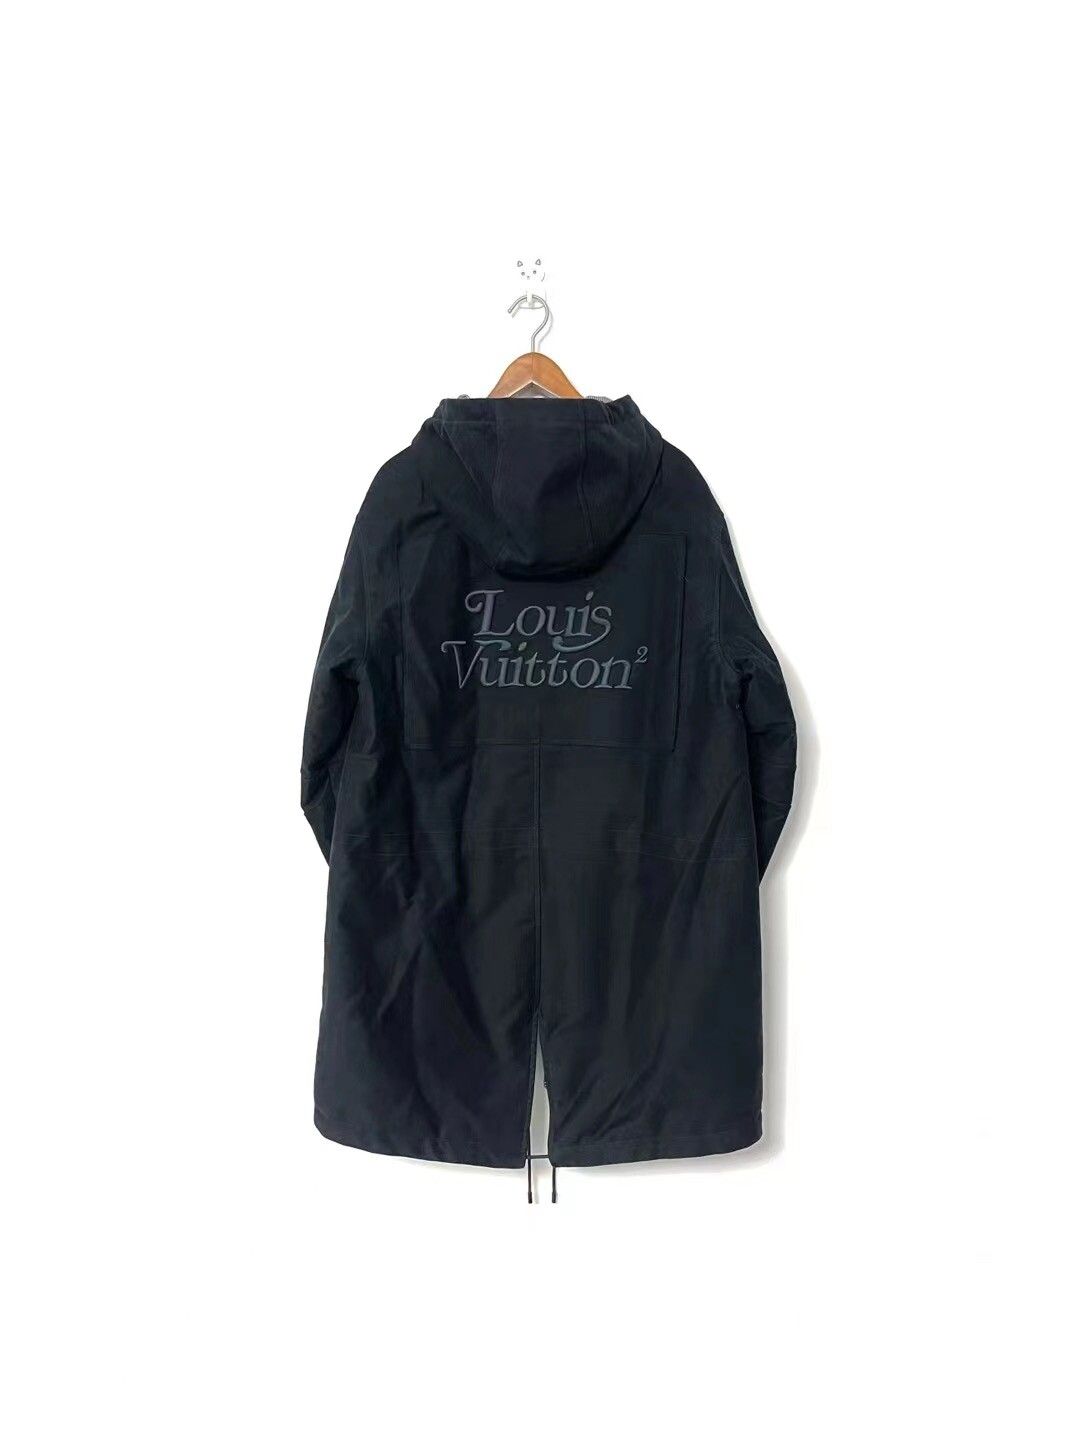 Louis Vuitton Heaven on earth runway clouds 90s raincoat jacket